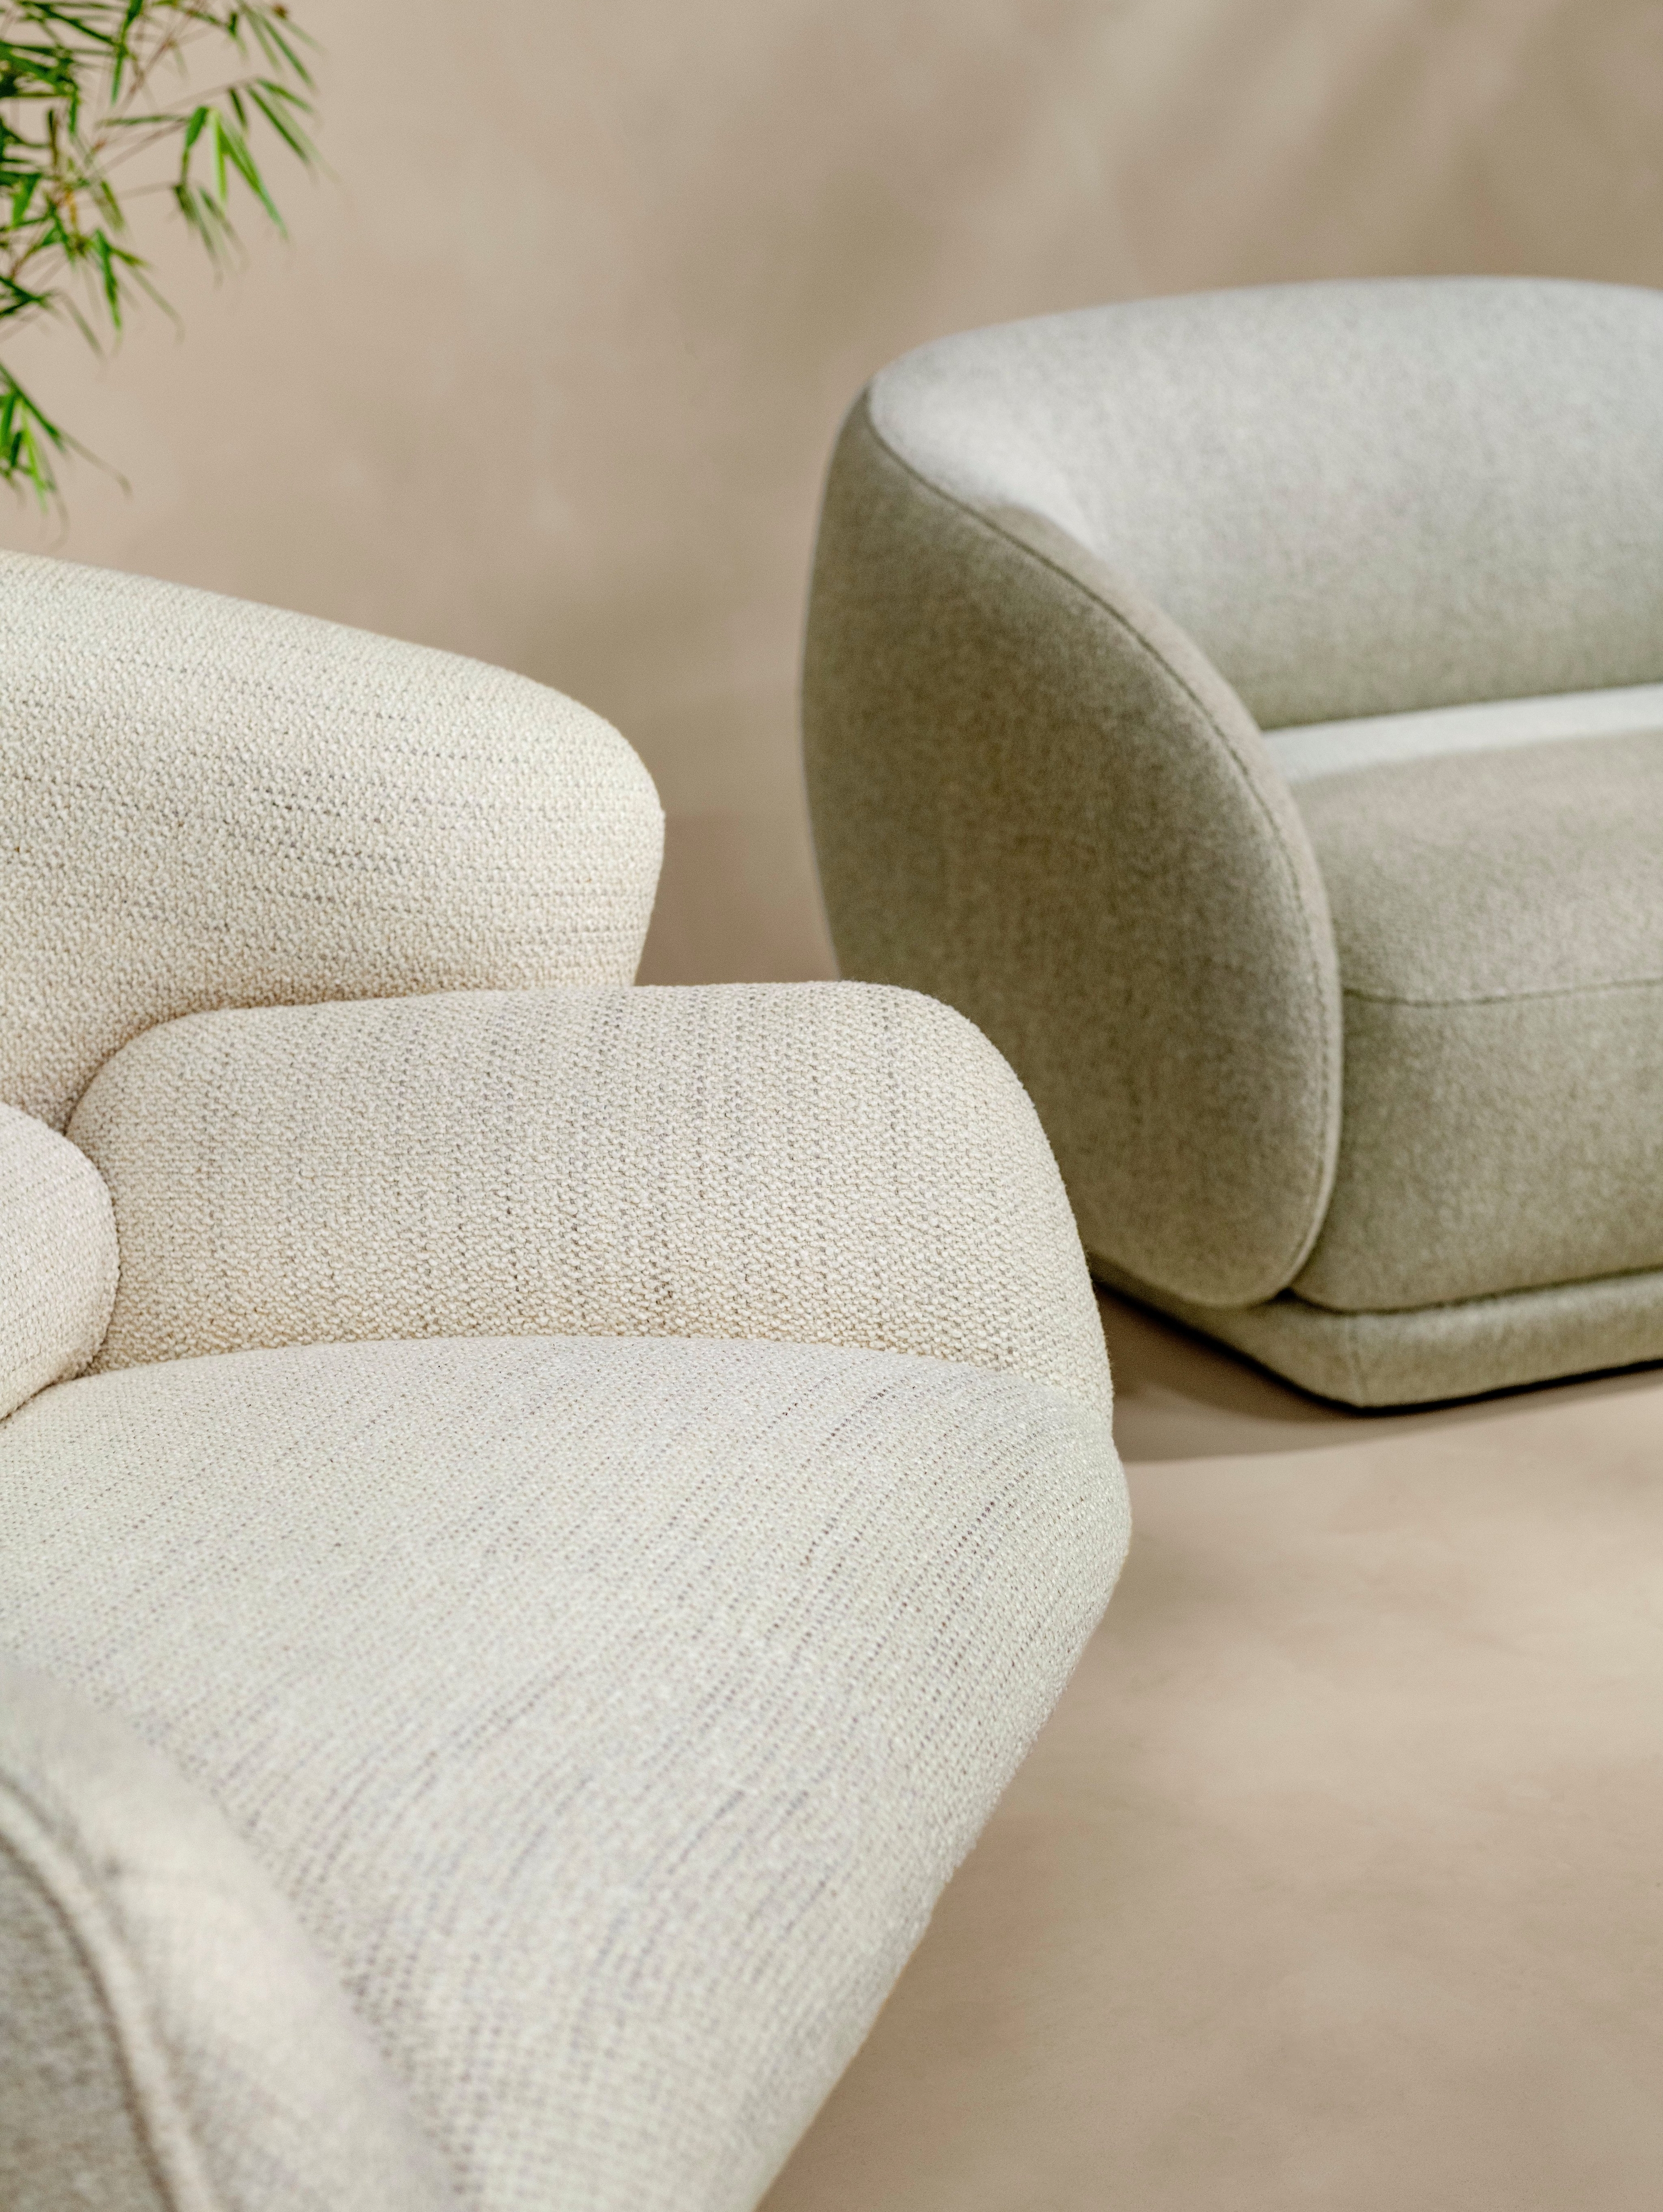 Fusion stol i hvitt Lazio tekstil stylet med Bolzano sjeselong i lysegrønt Lazio tekstil.